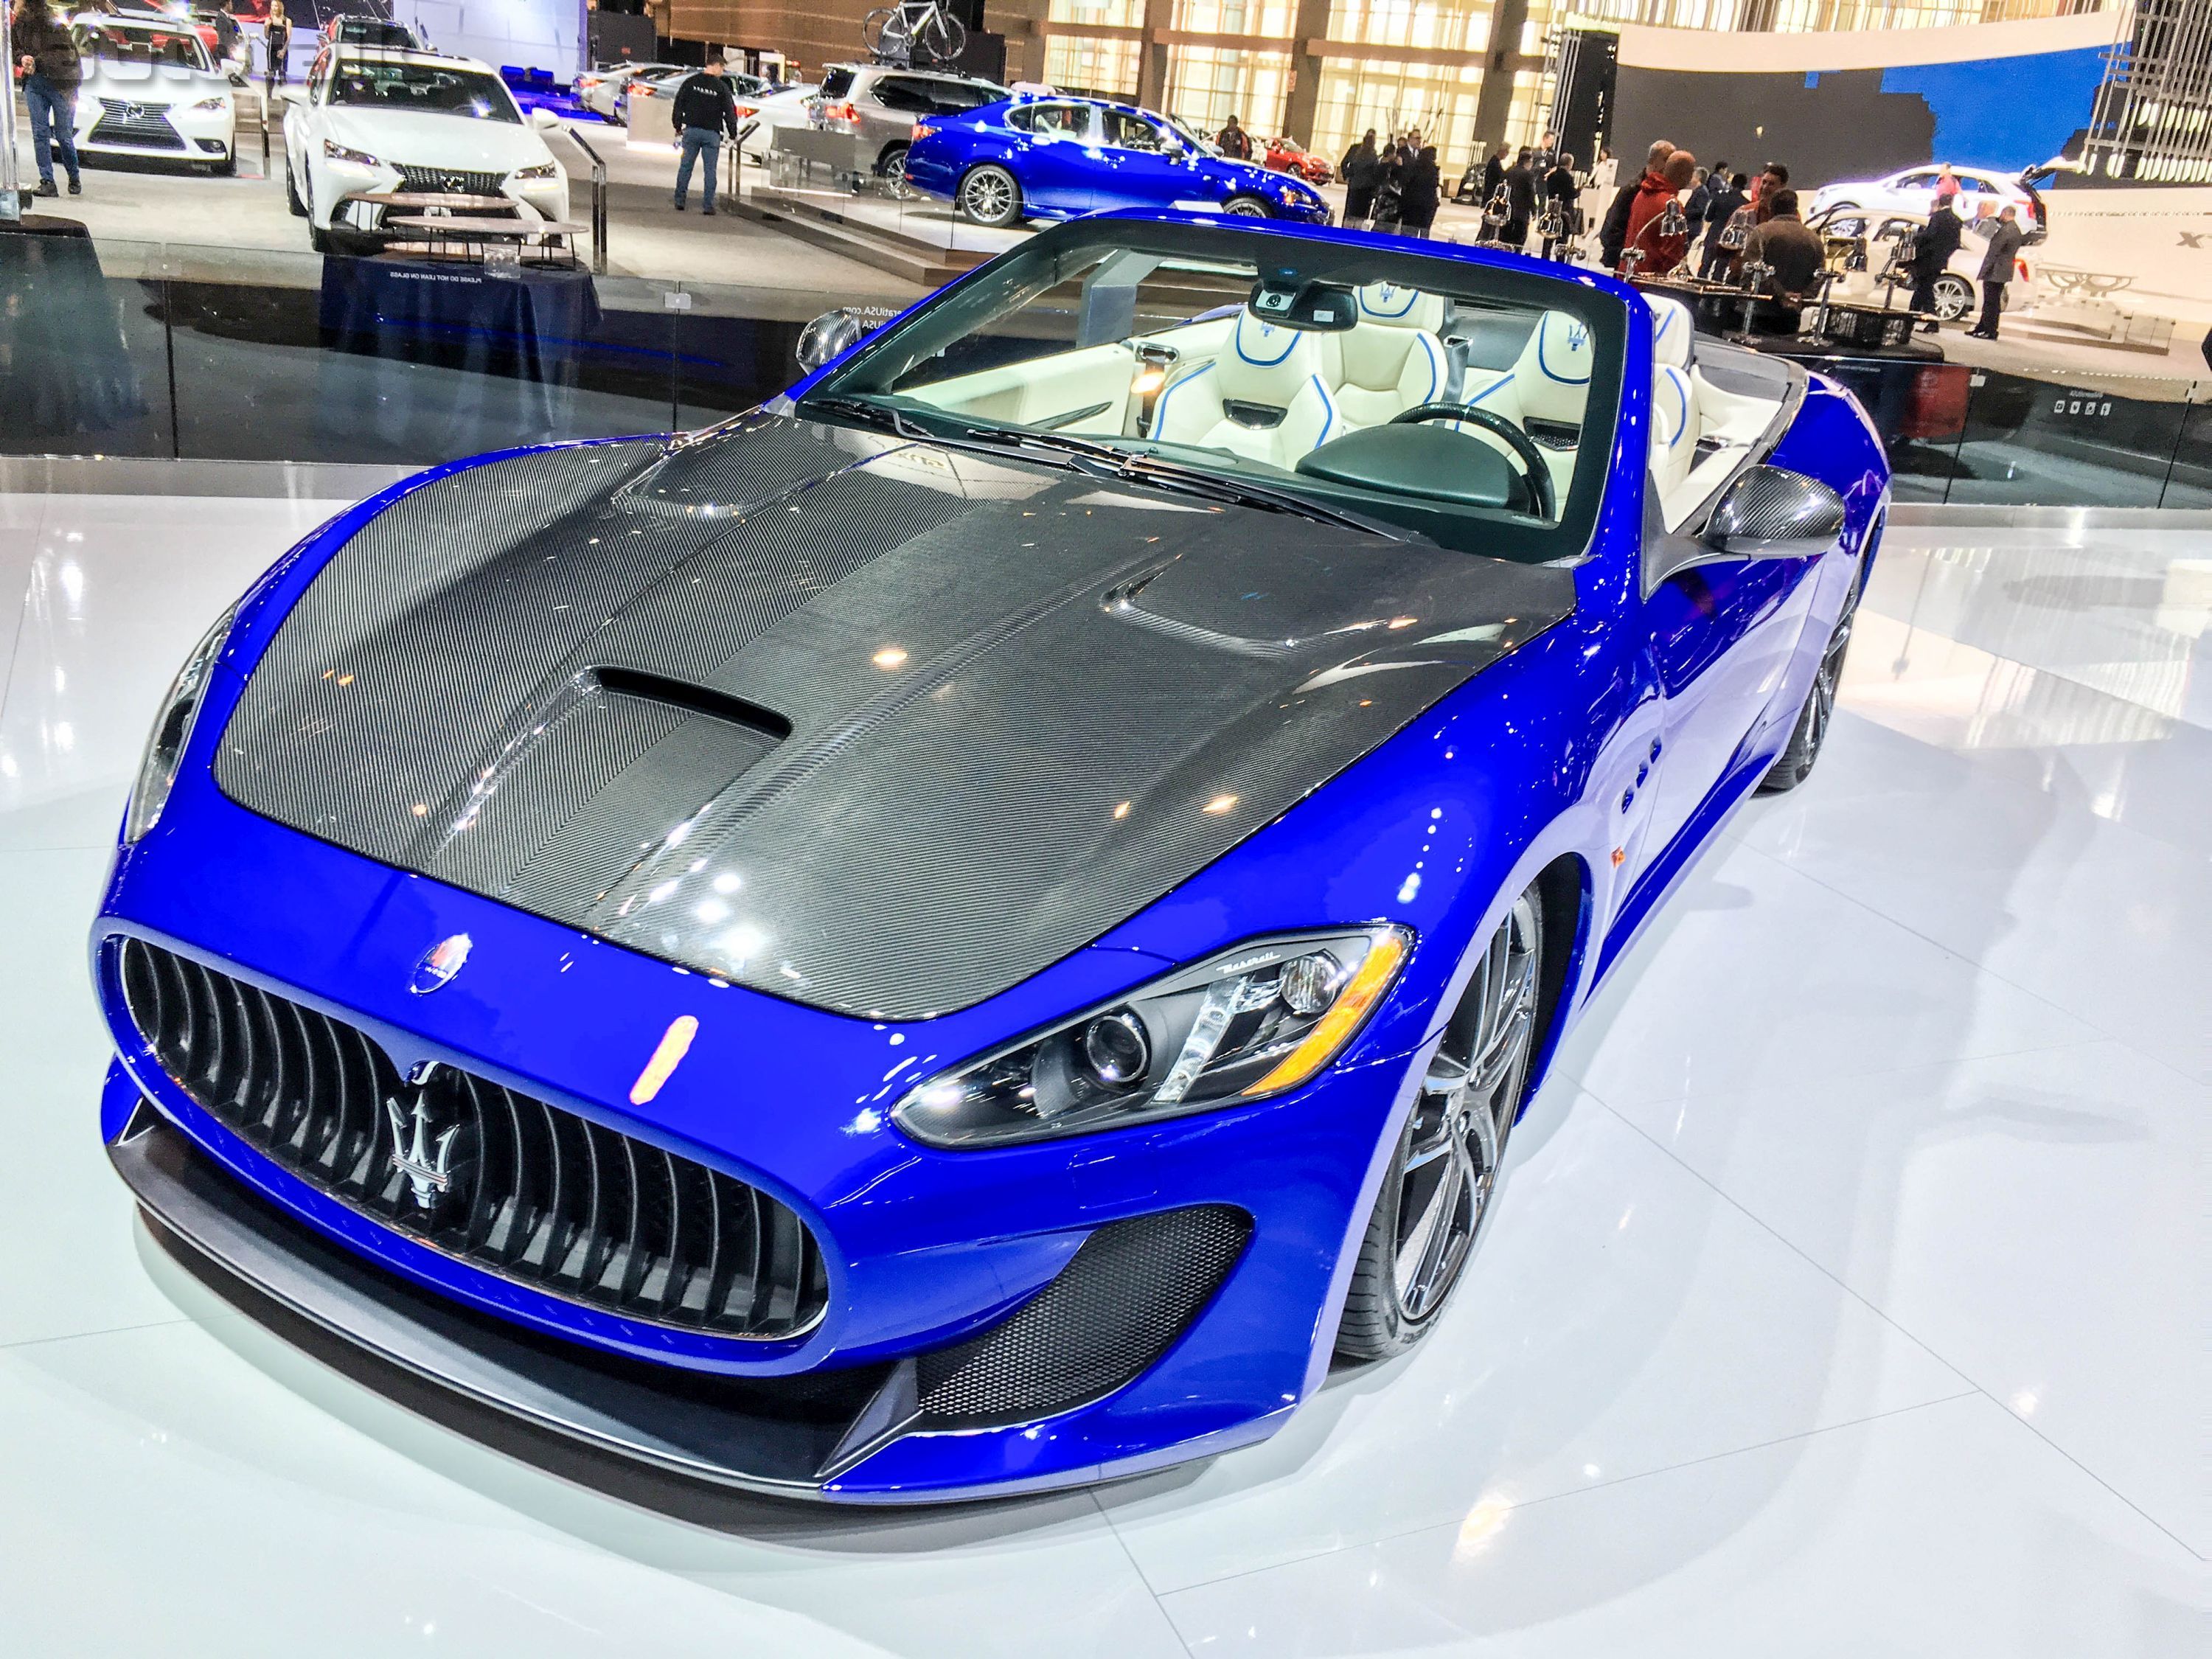 Maserati at 2016 Chicago Auto Show